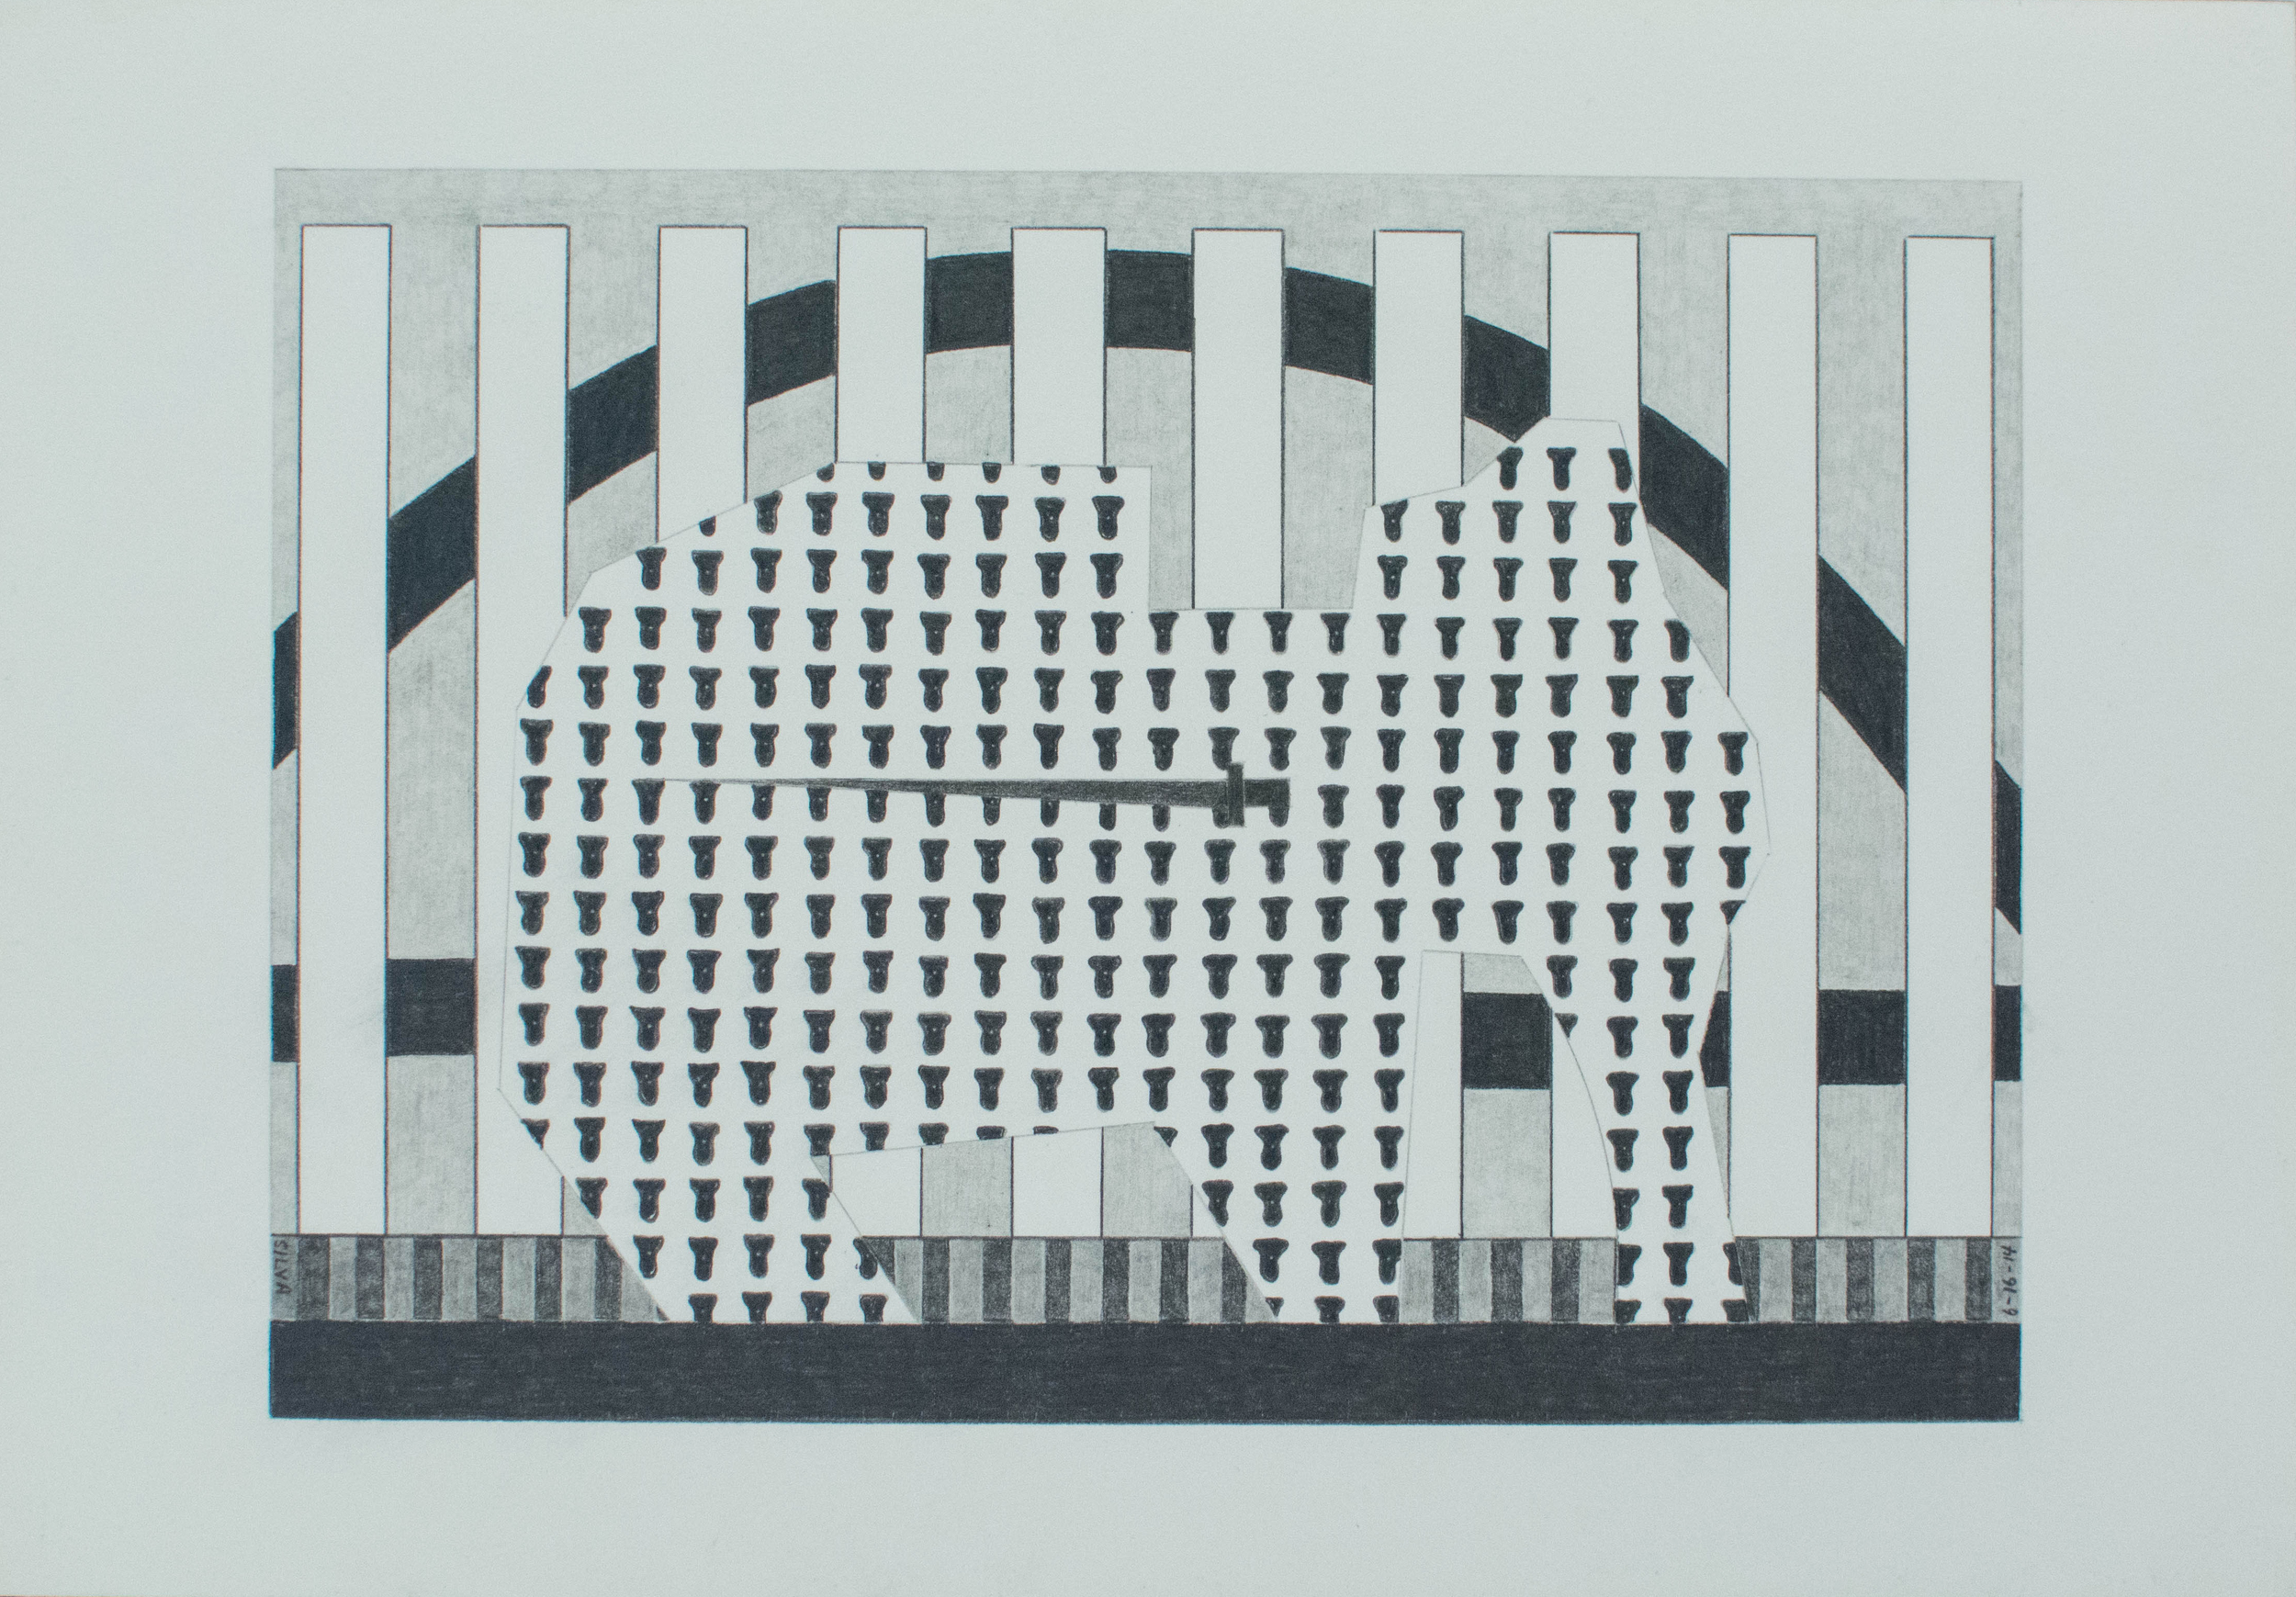 6-16-14, 2014, Graphite on paper, 7 x 10 inches